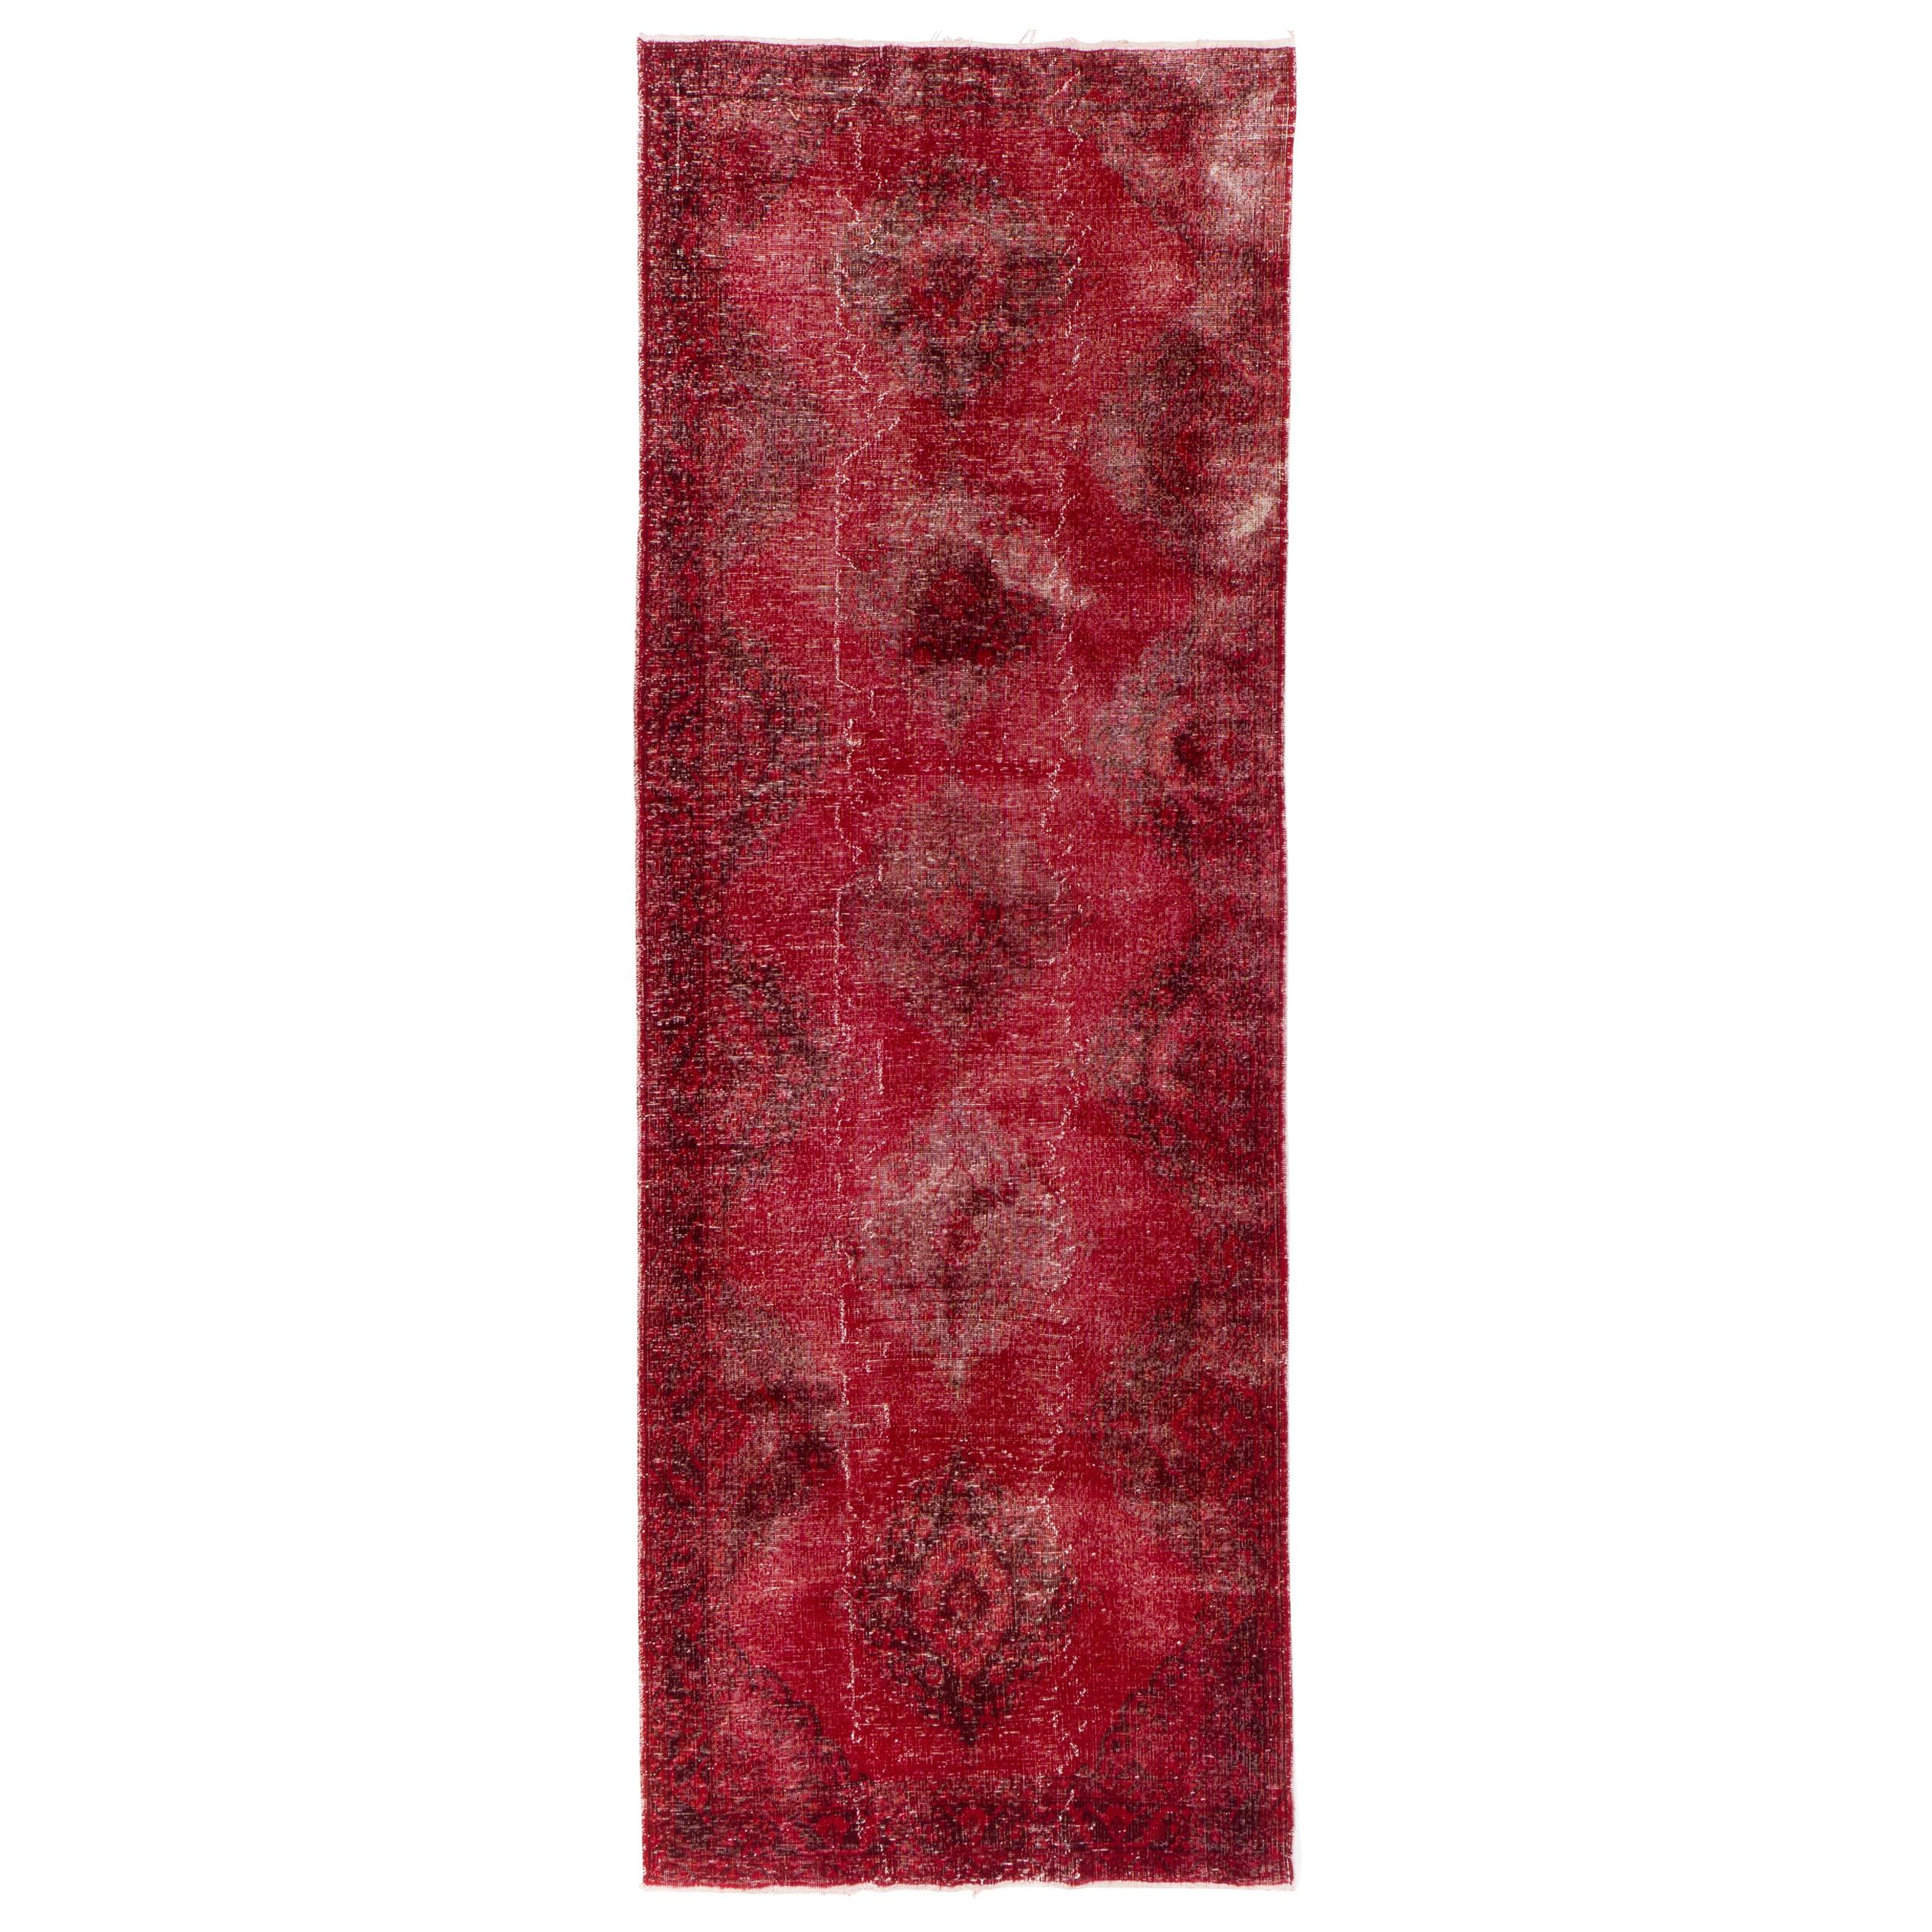 4.8x13 Ft Distressed Vintage Turkish Runner Rug in Red. Modern Handmade Carpet For Sale